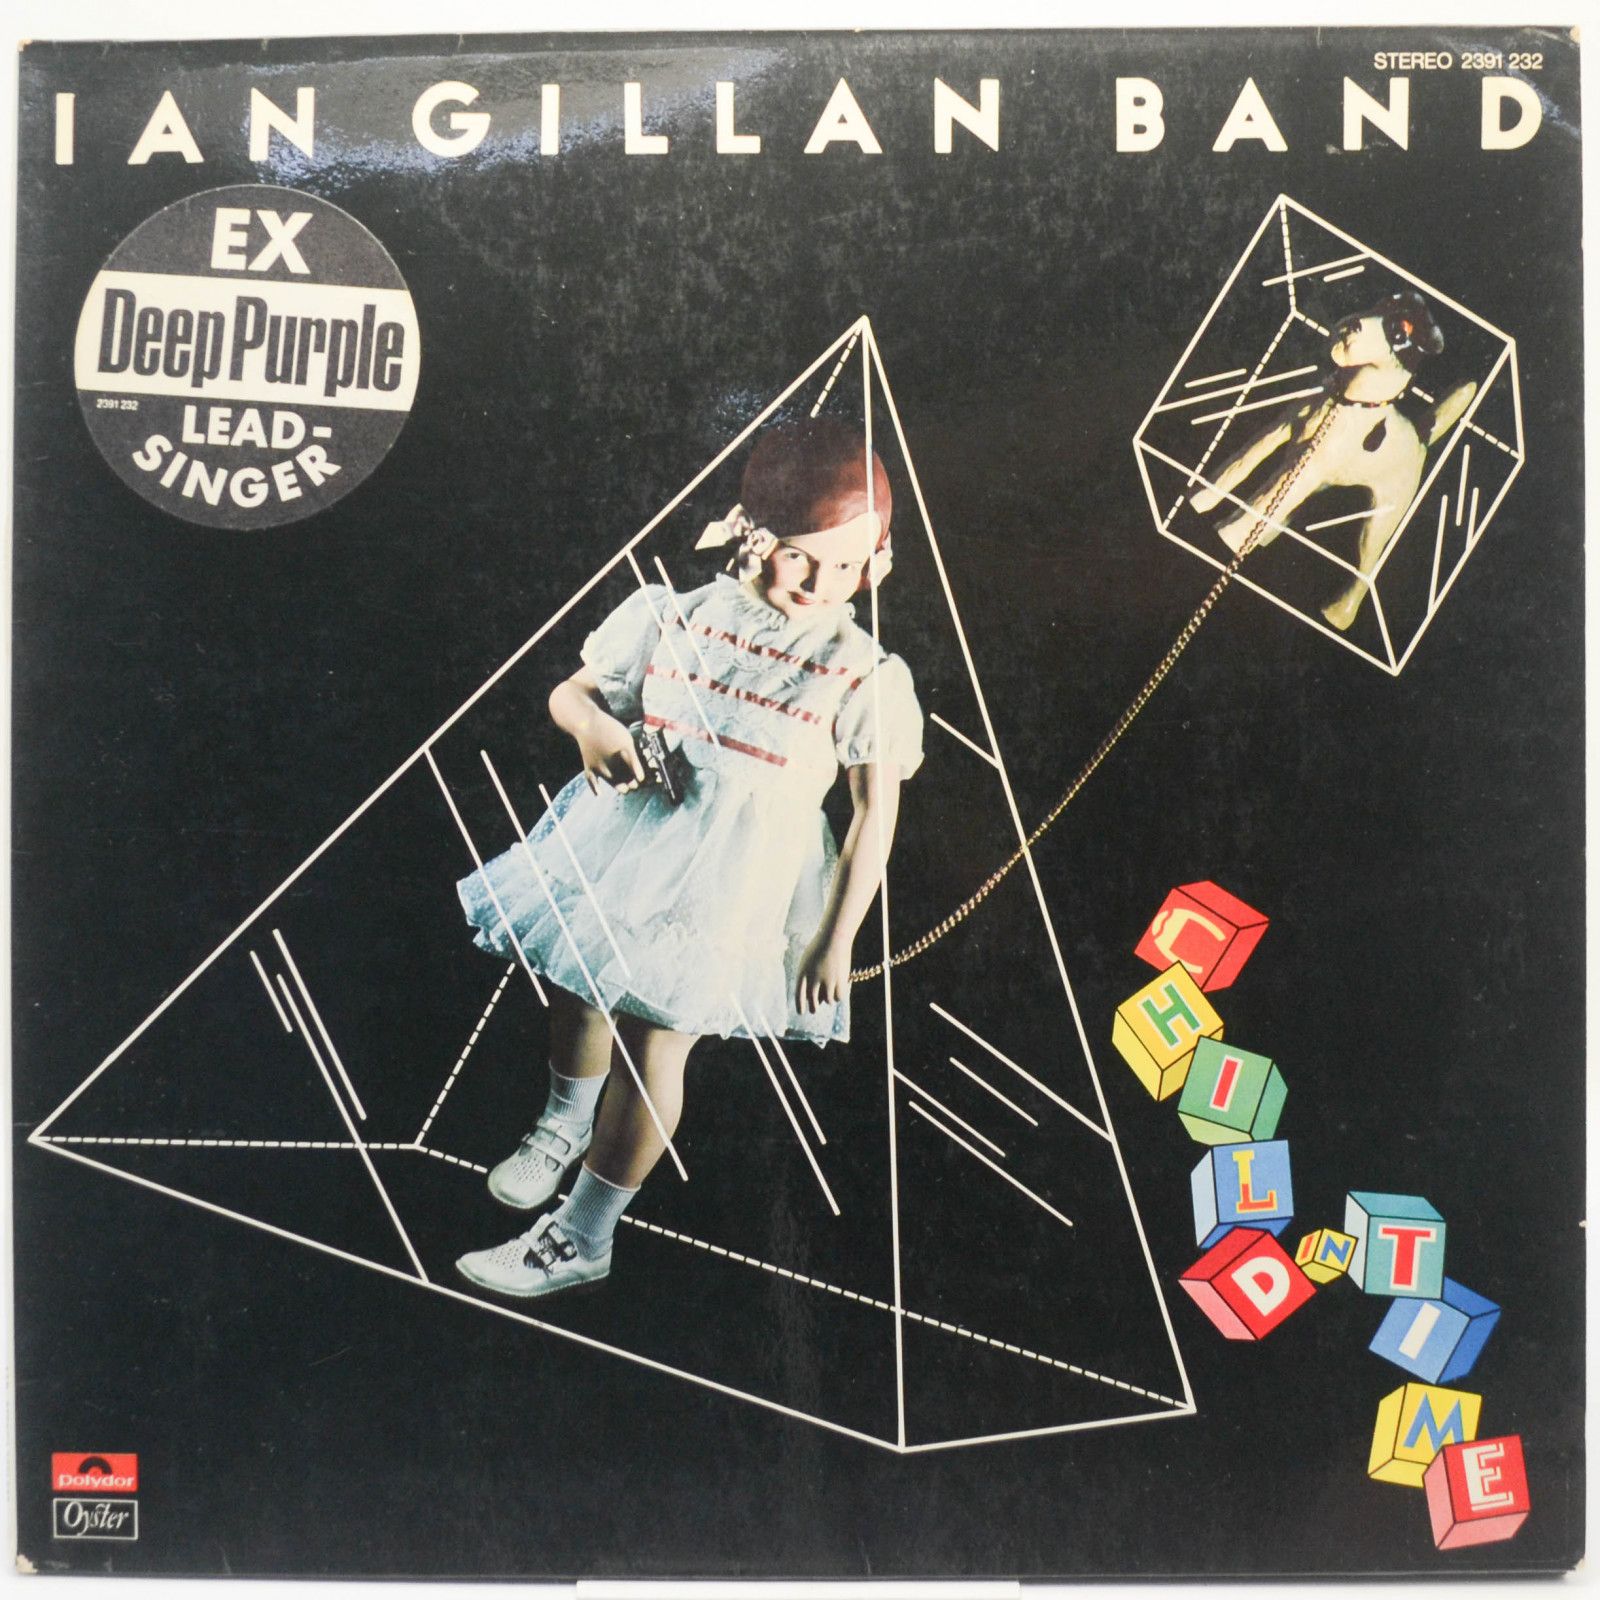 Ian Gillan Band — Child In Time, 1976